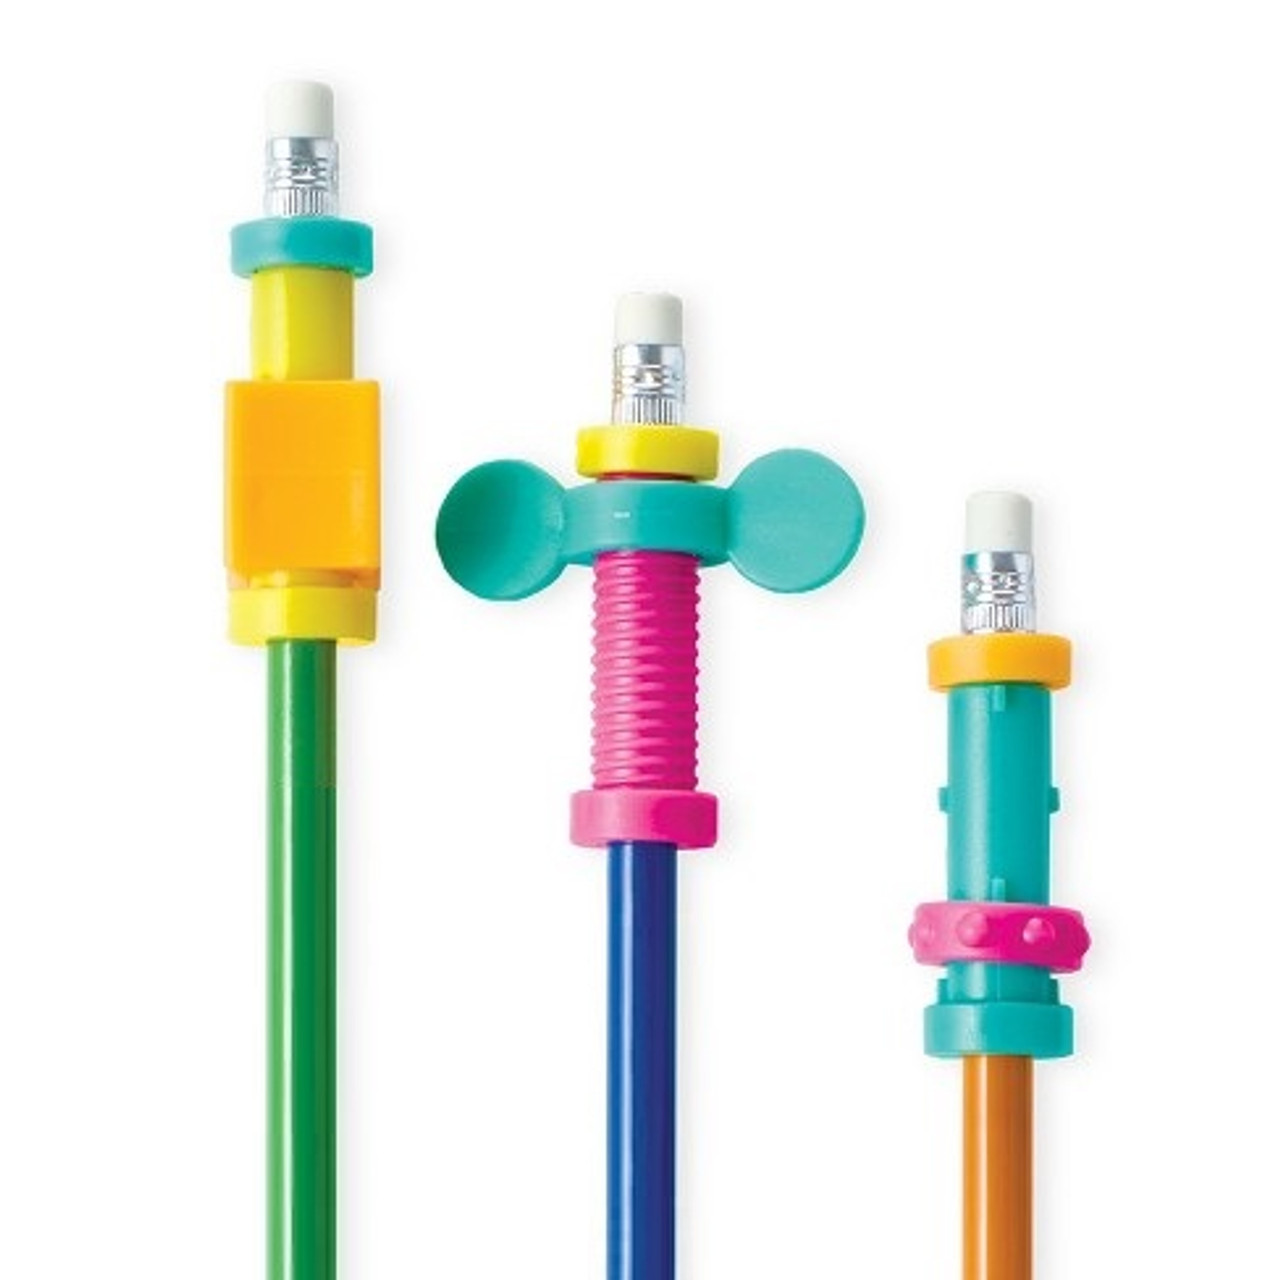 Pencil Fidget Topper: Special Needs Fidgets for the Classroom1280 x 1280